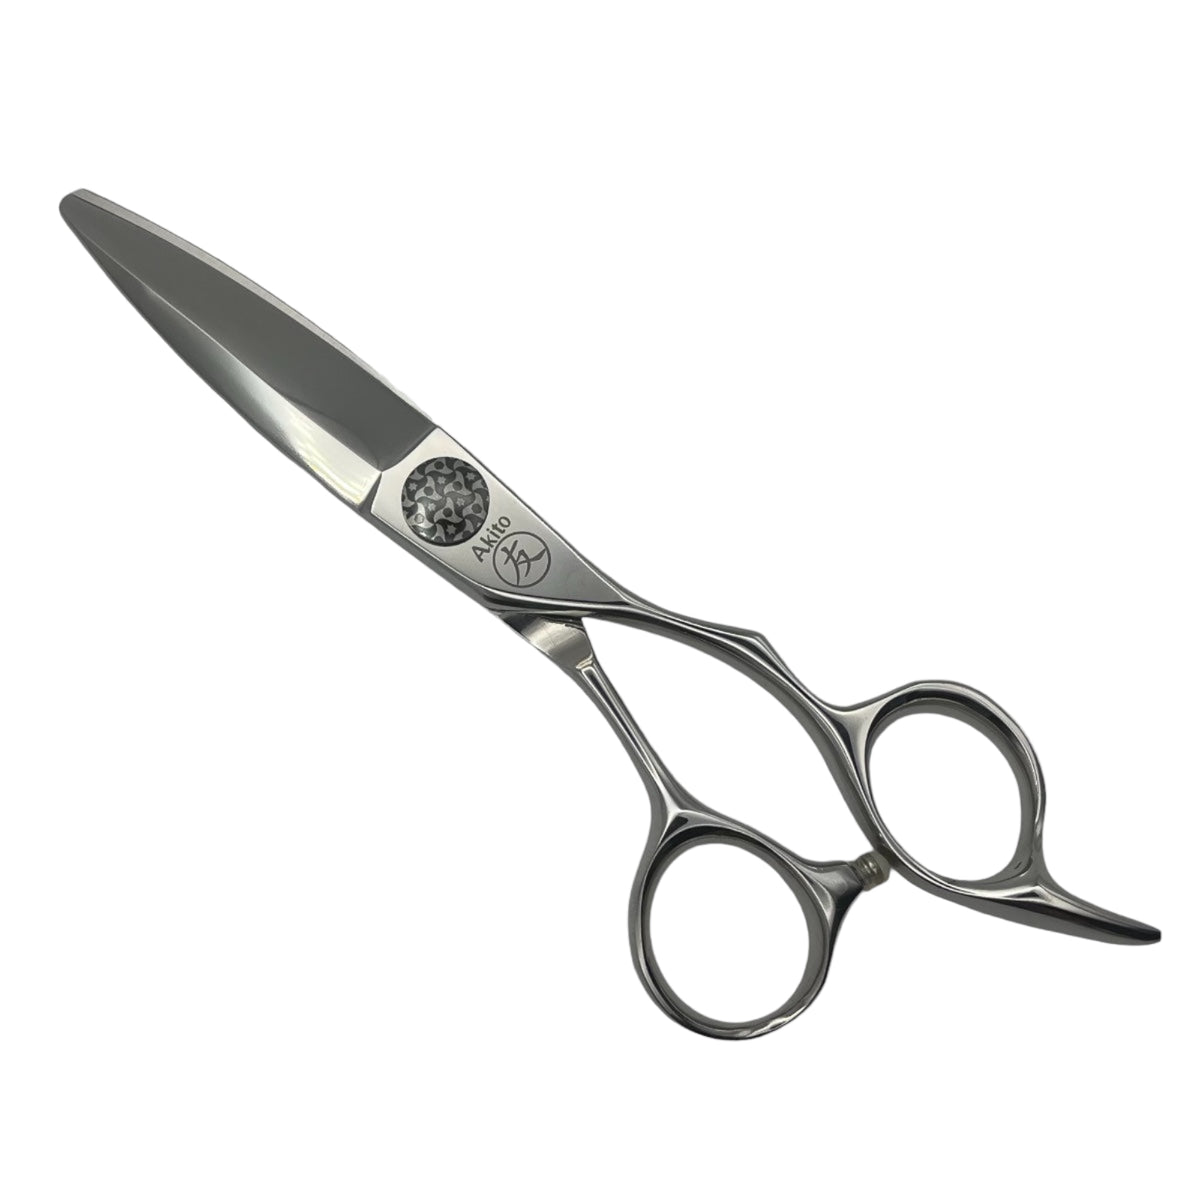 Omega slicing scissors